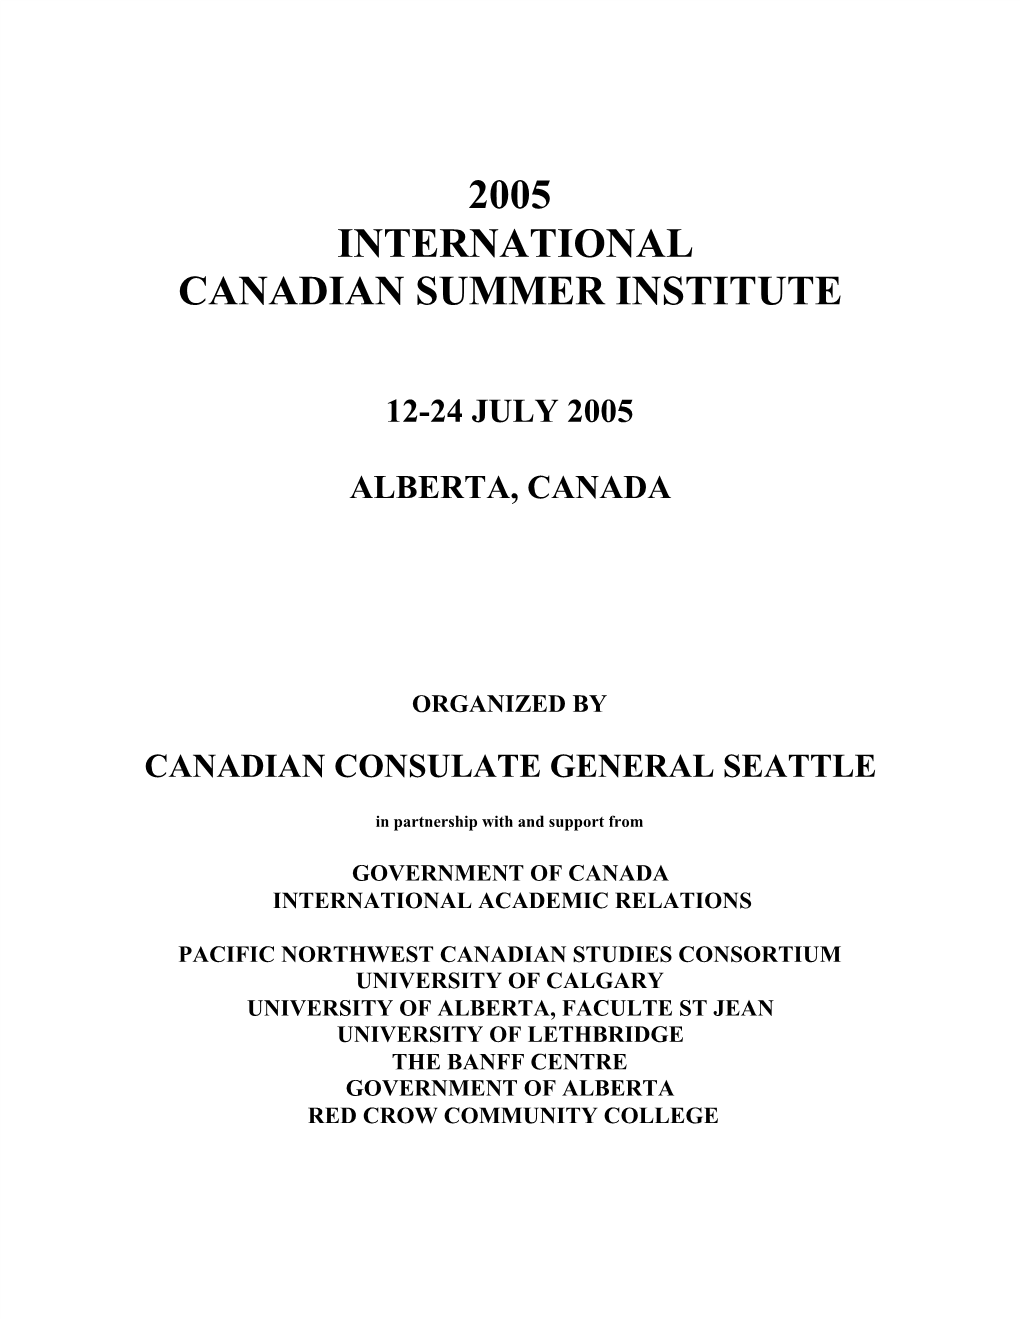 2005 International Canadian Summer Institute